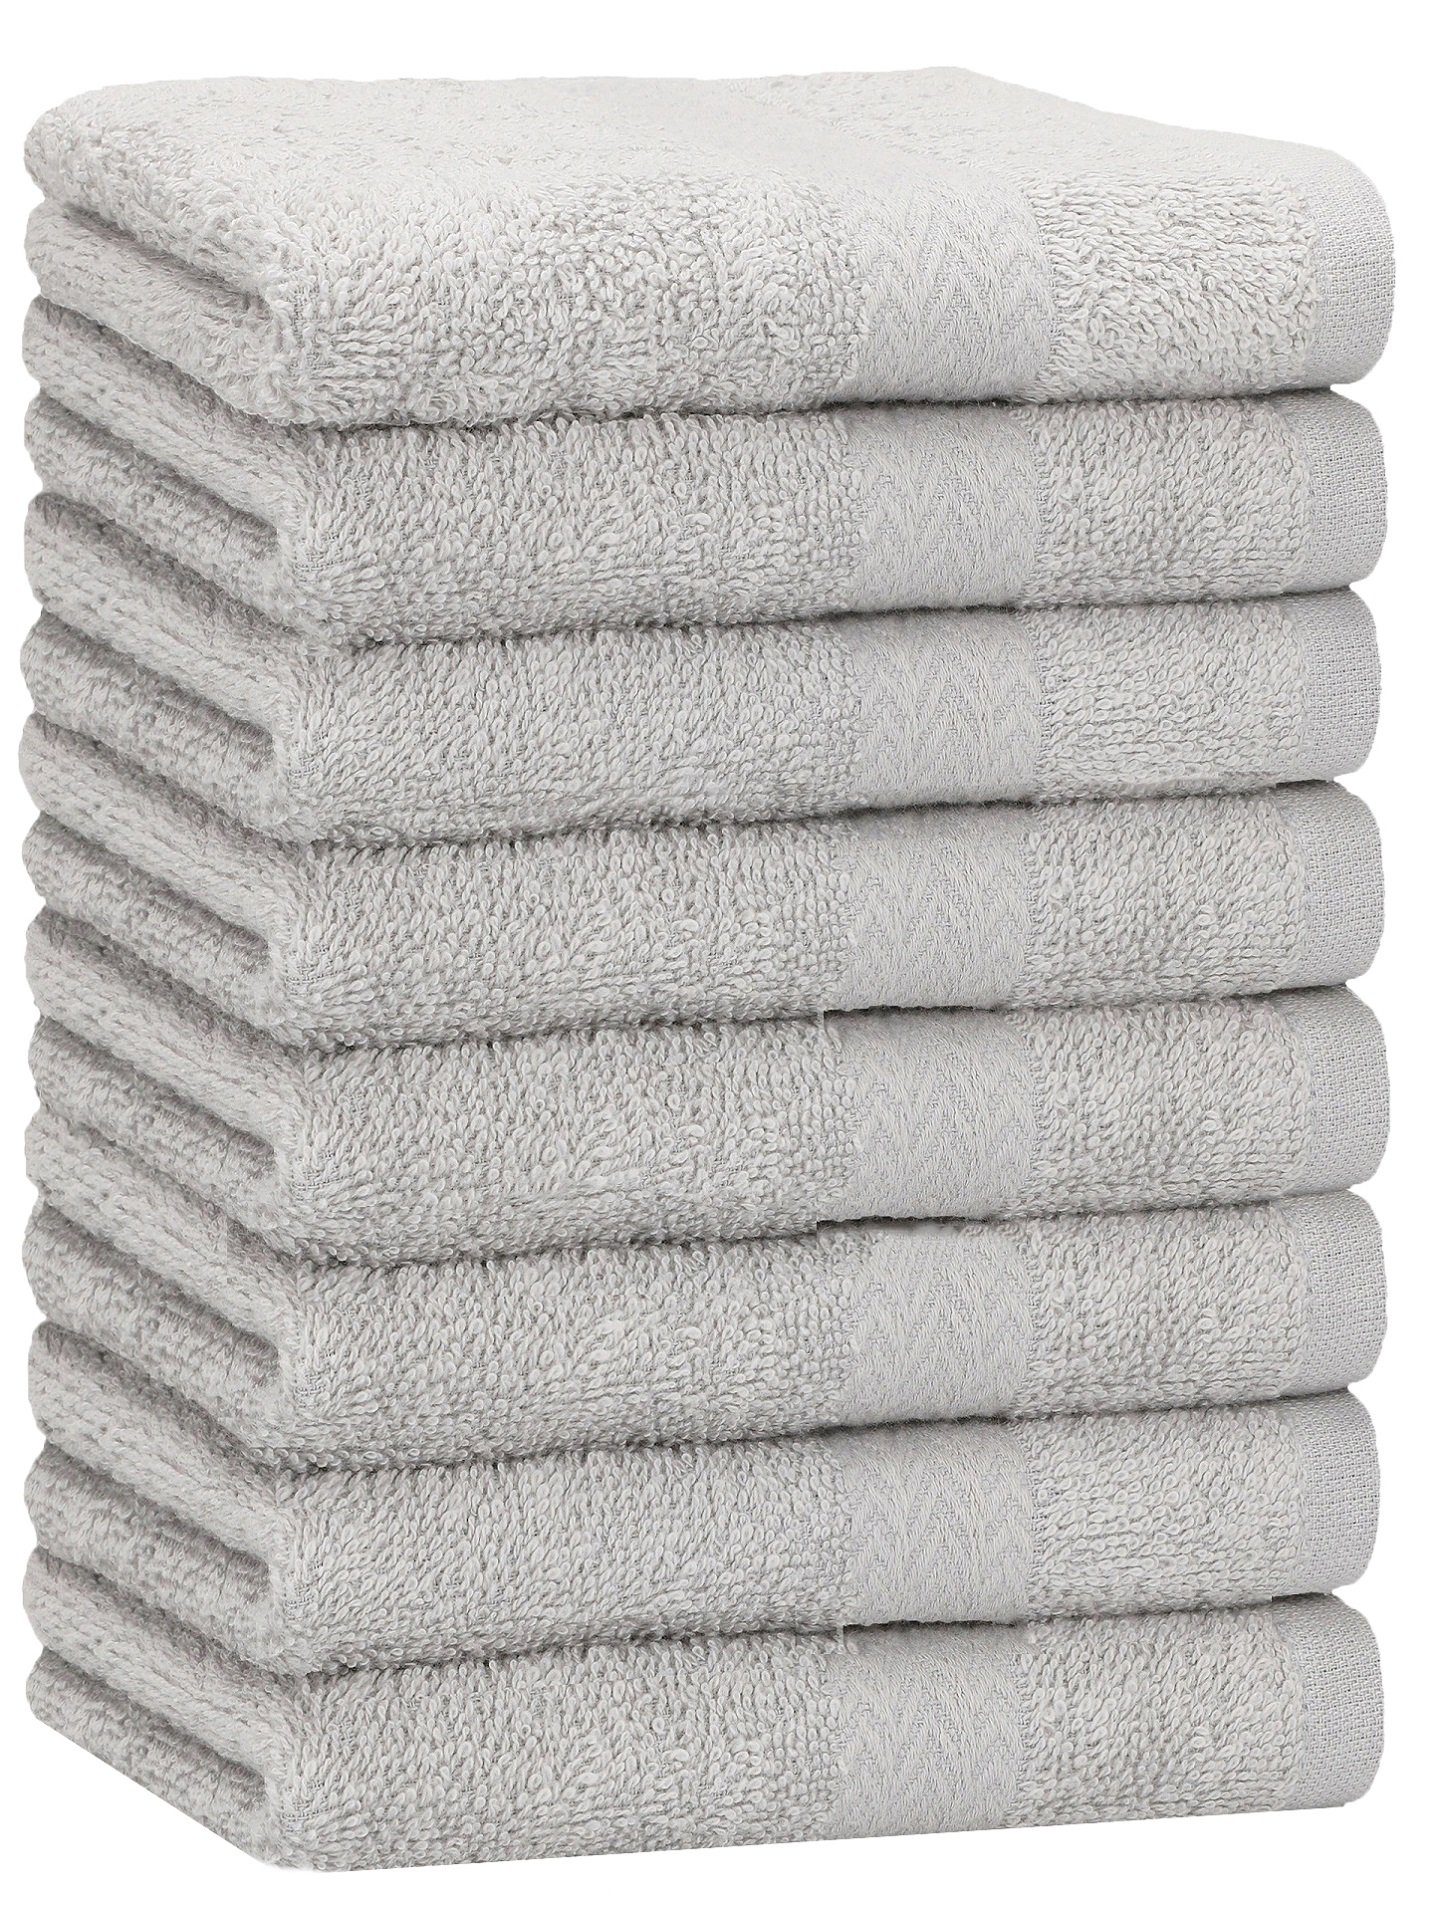 Betz Handtücher 8 Stück 50x100 cm Handtuch Premium, 100% Baumwolle